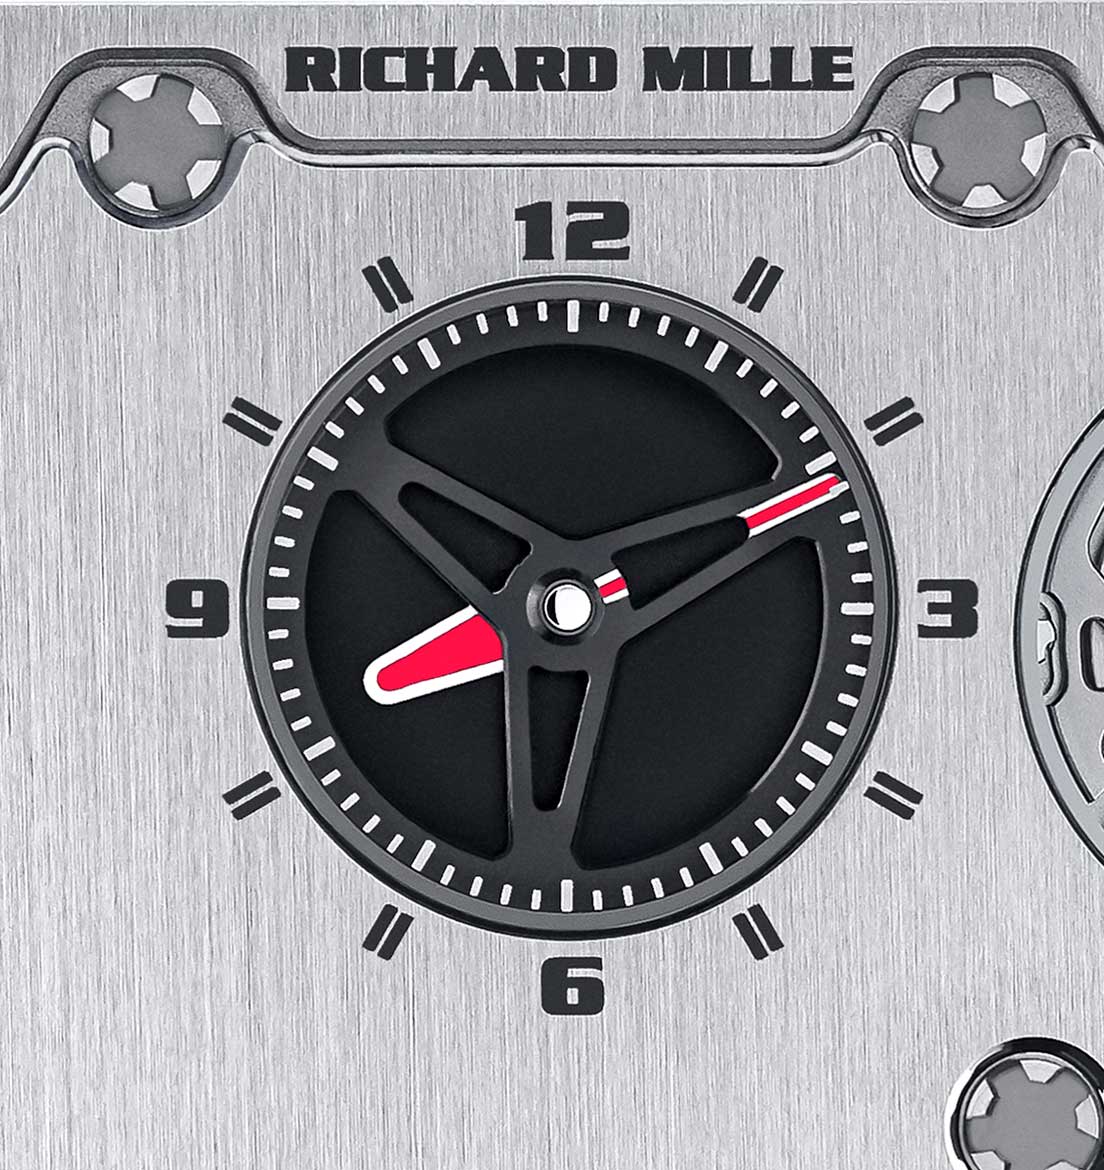 Horas y Minutos del Richard Mille RM UP 01 Ferrari